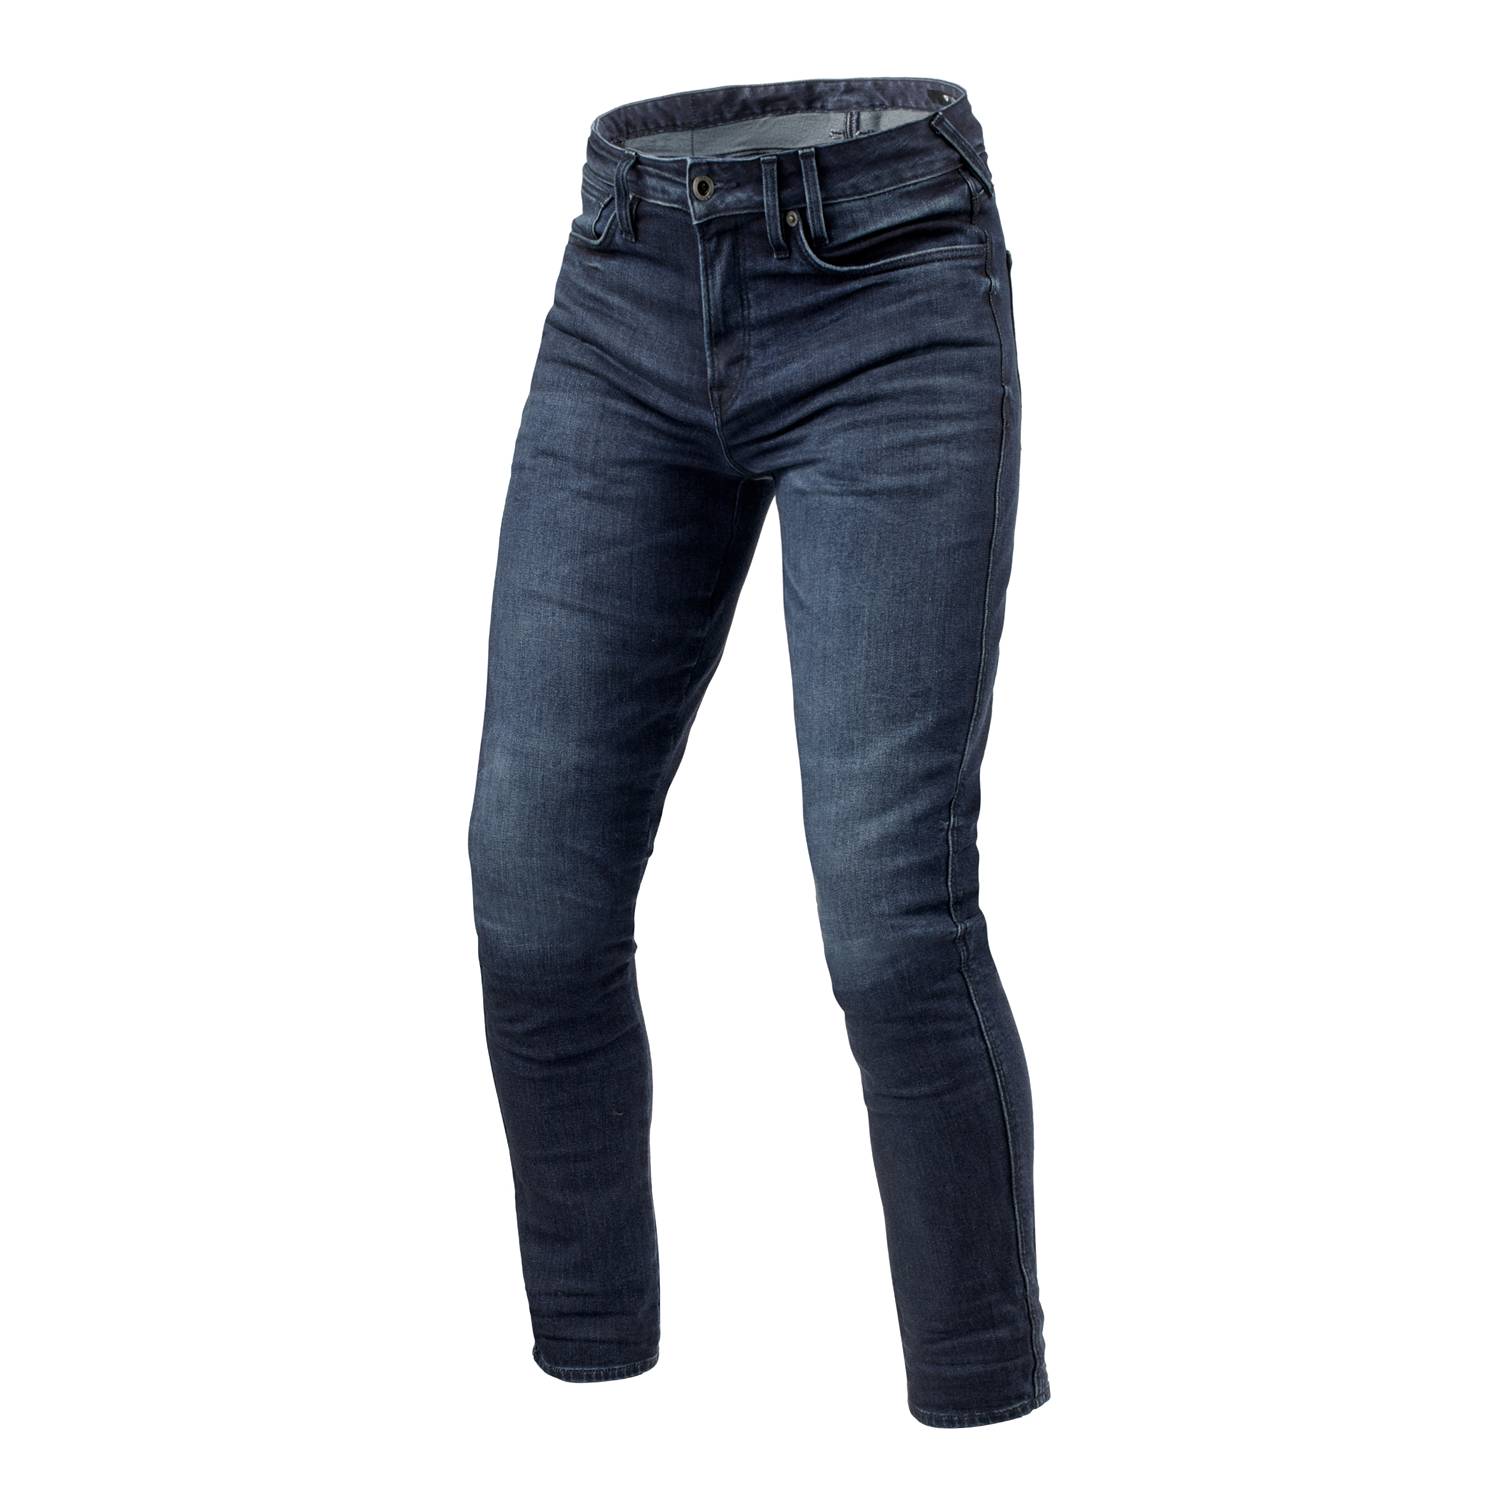 Image of REV'IT! Jeans Carlin SK Dark Blue Used L32 Motorcycle Jeans Talla L32/W33